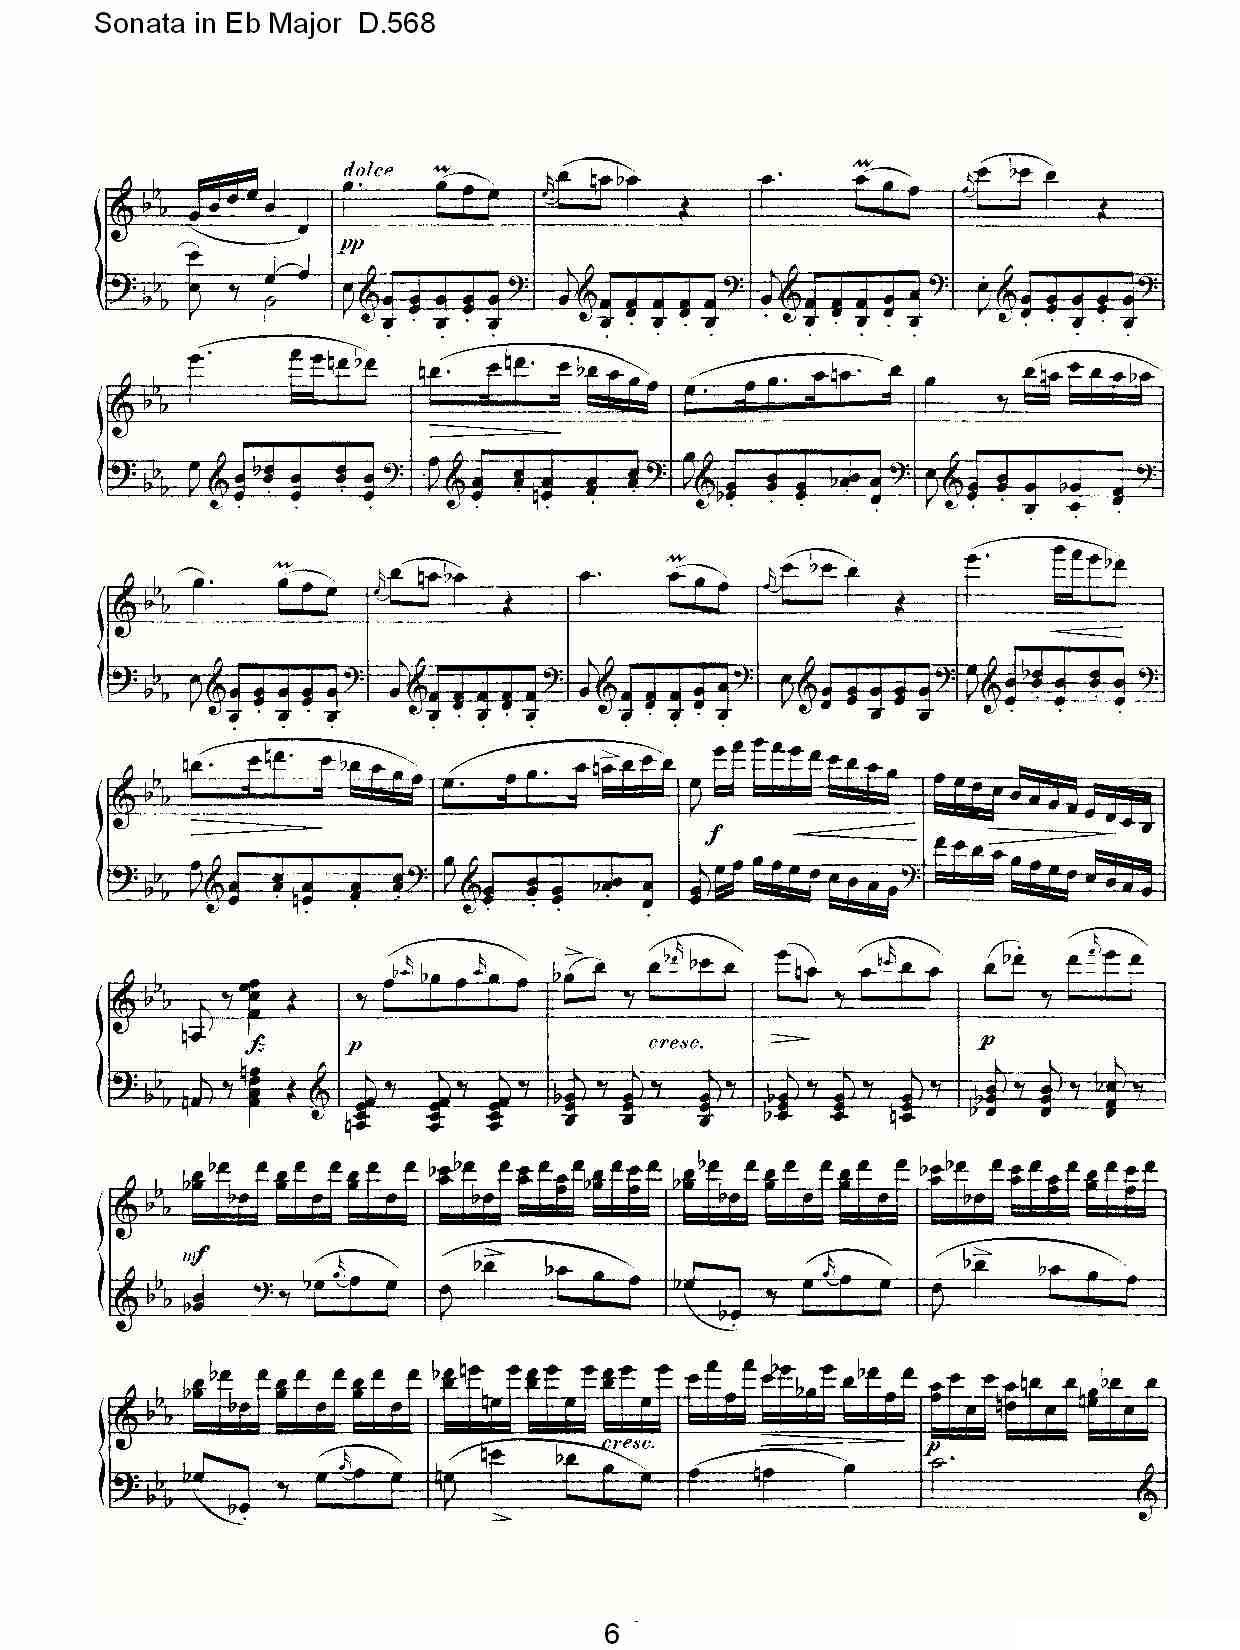 Sonata in Eb Major D.568（Eb大调奏鸣曲 D.568）钢琴曲谱（图6）